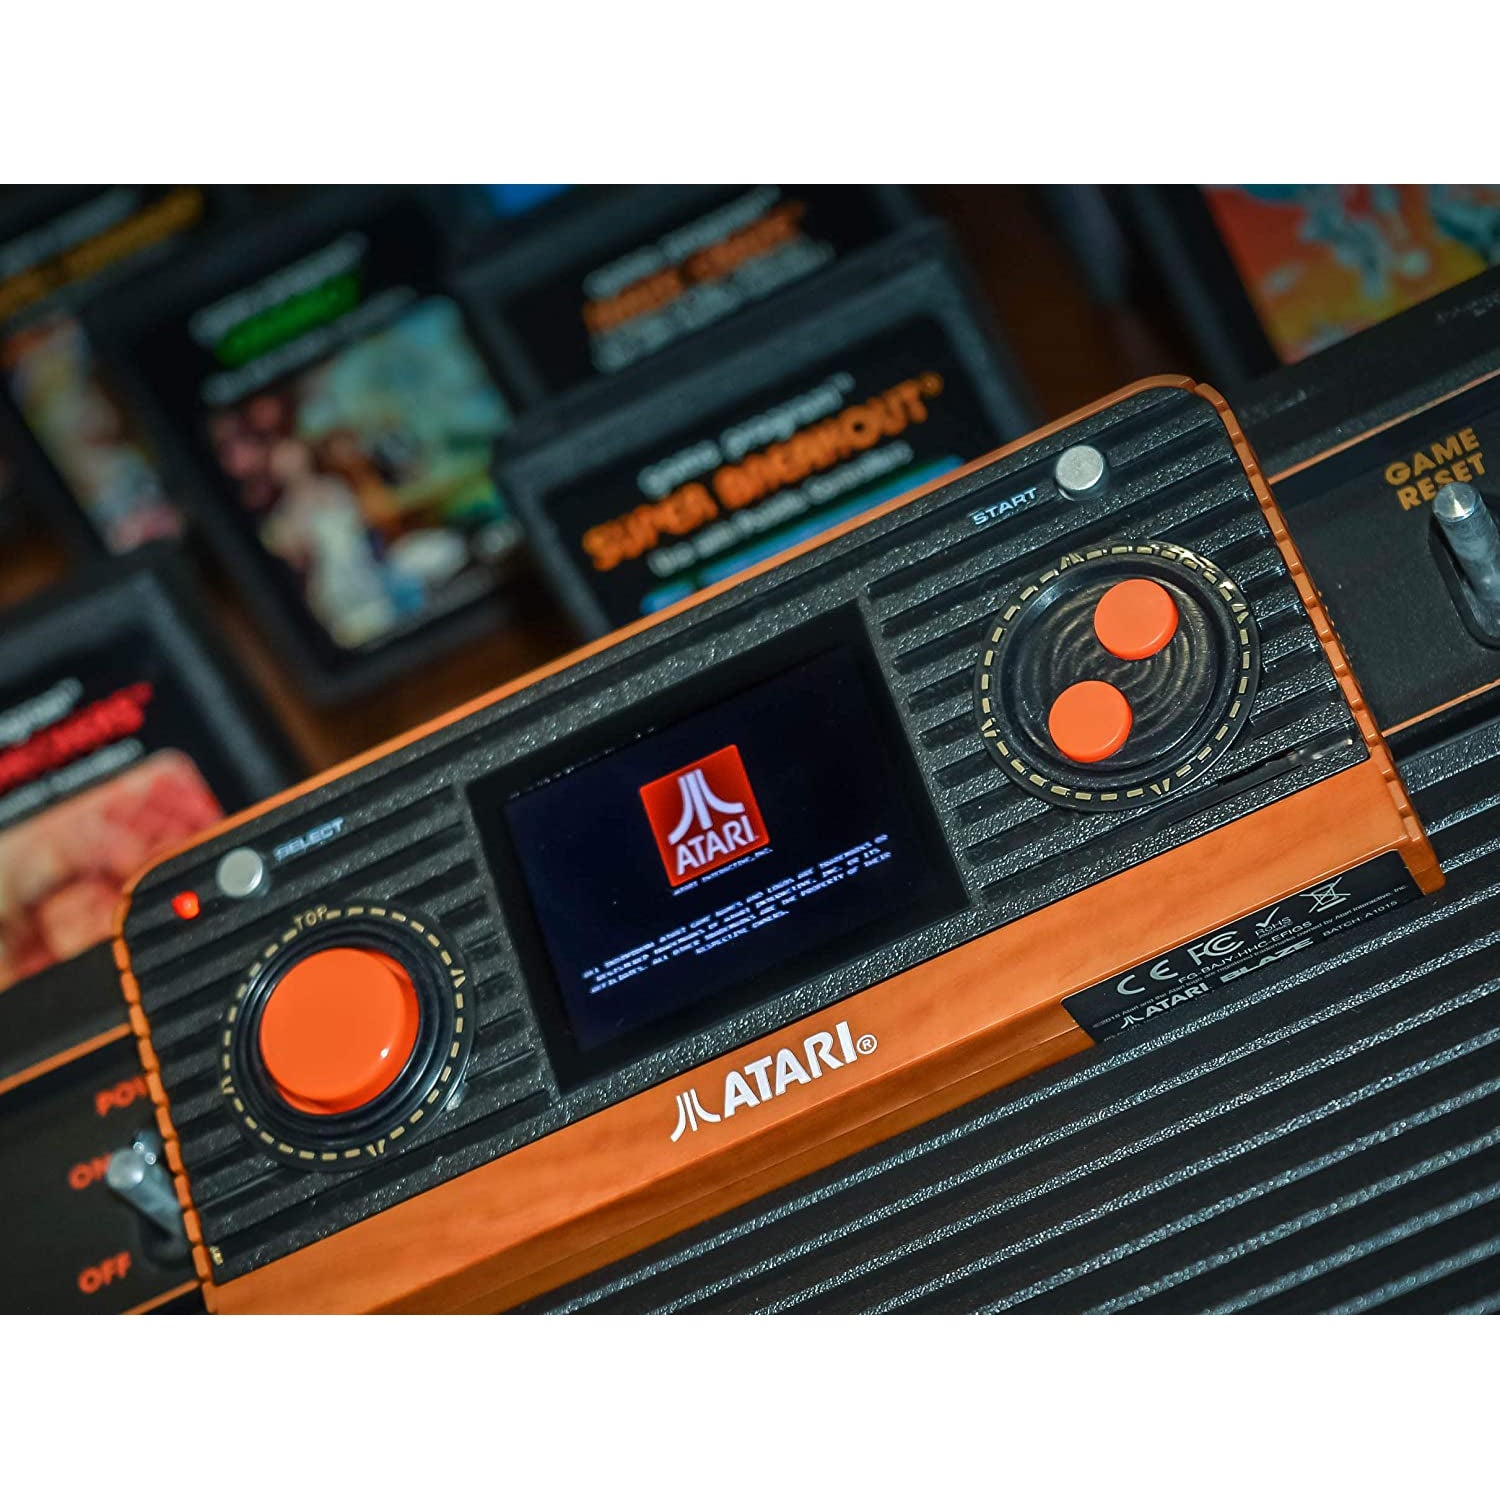 Atari Pac-Man Retro Handheld Console with 60 Games - New